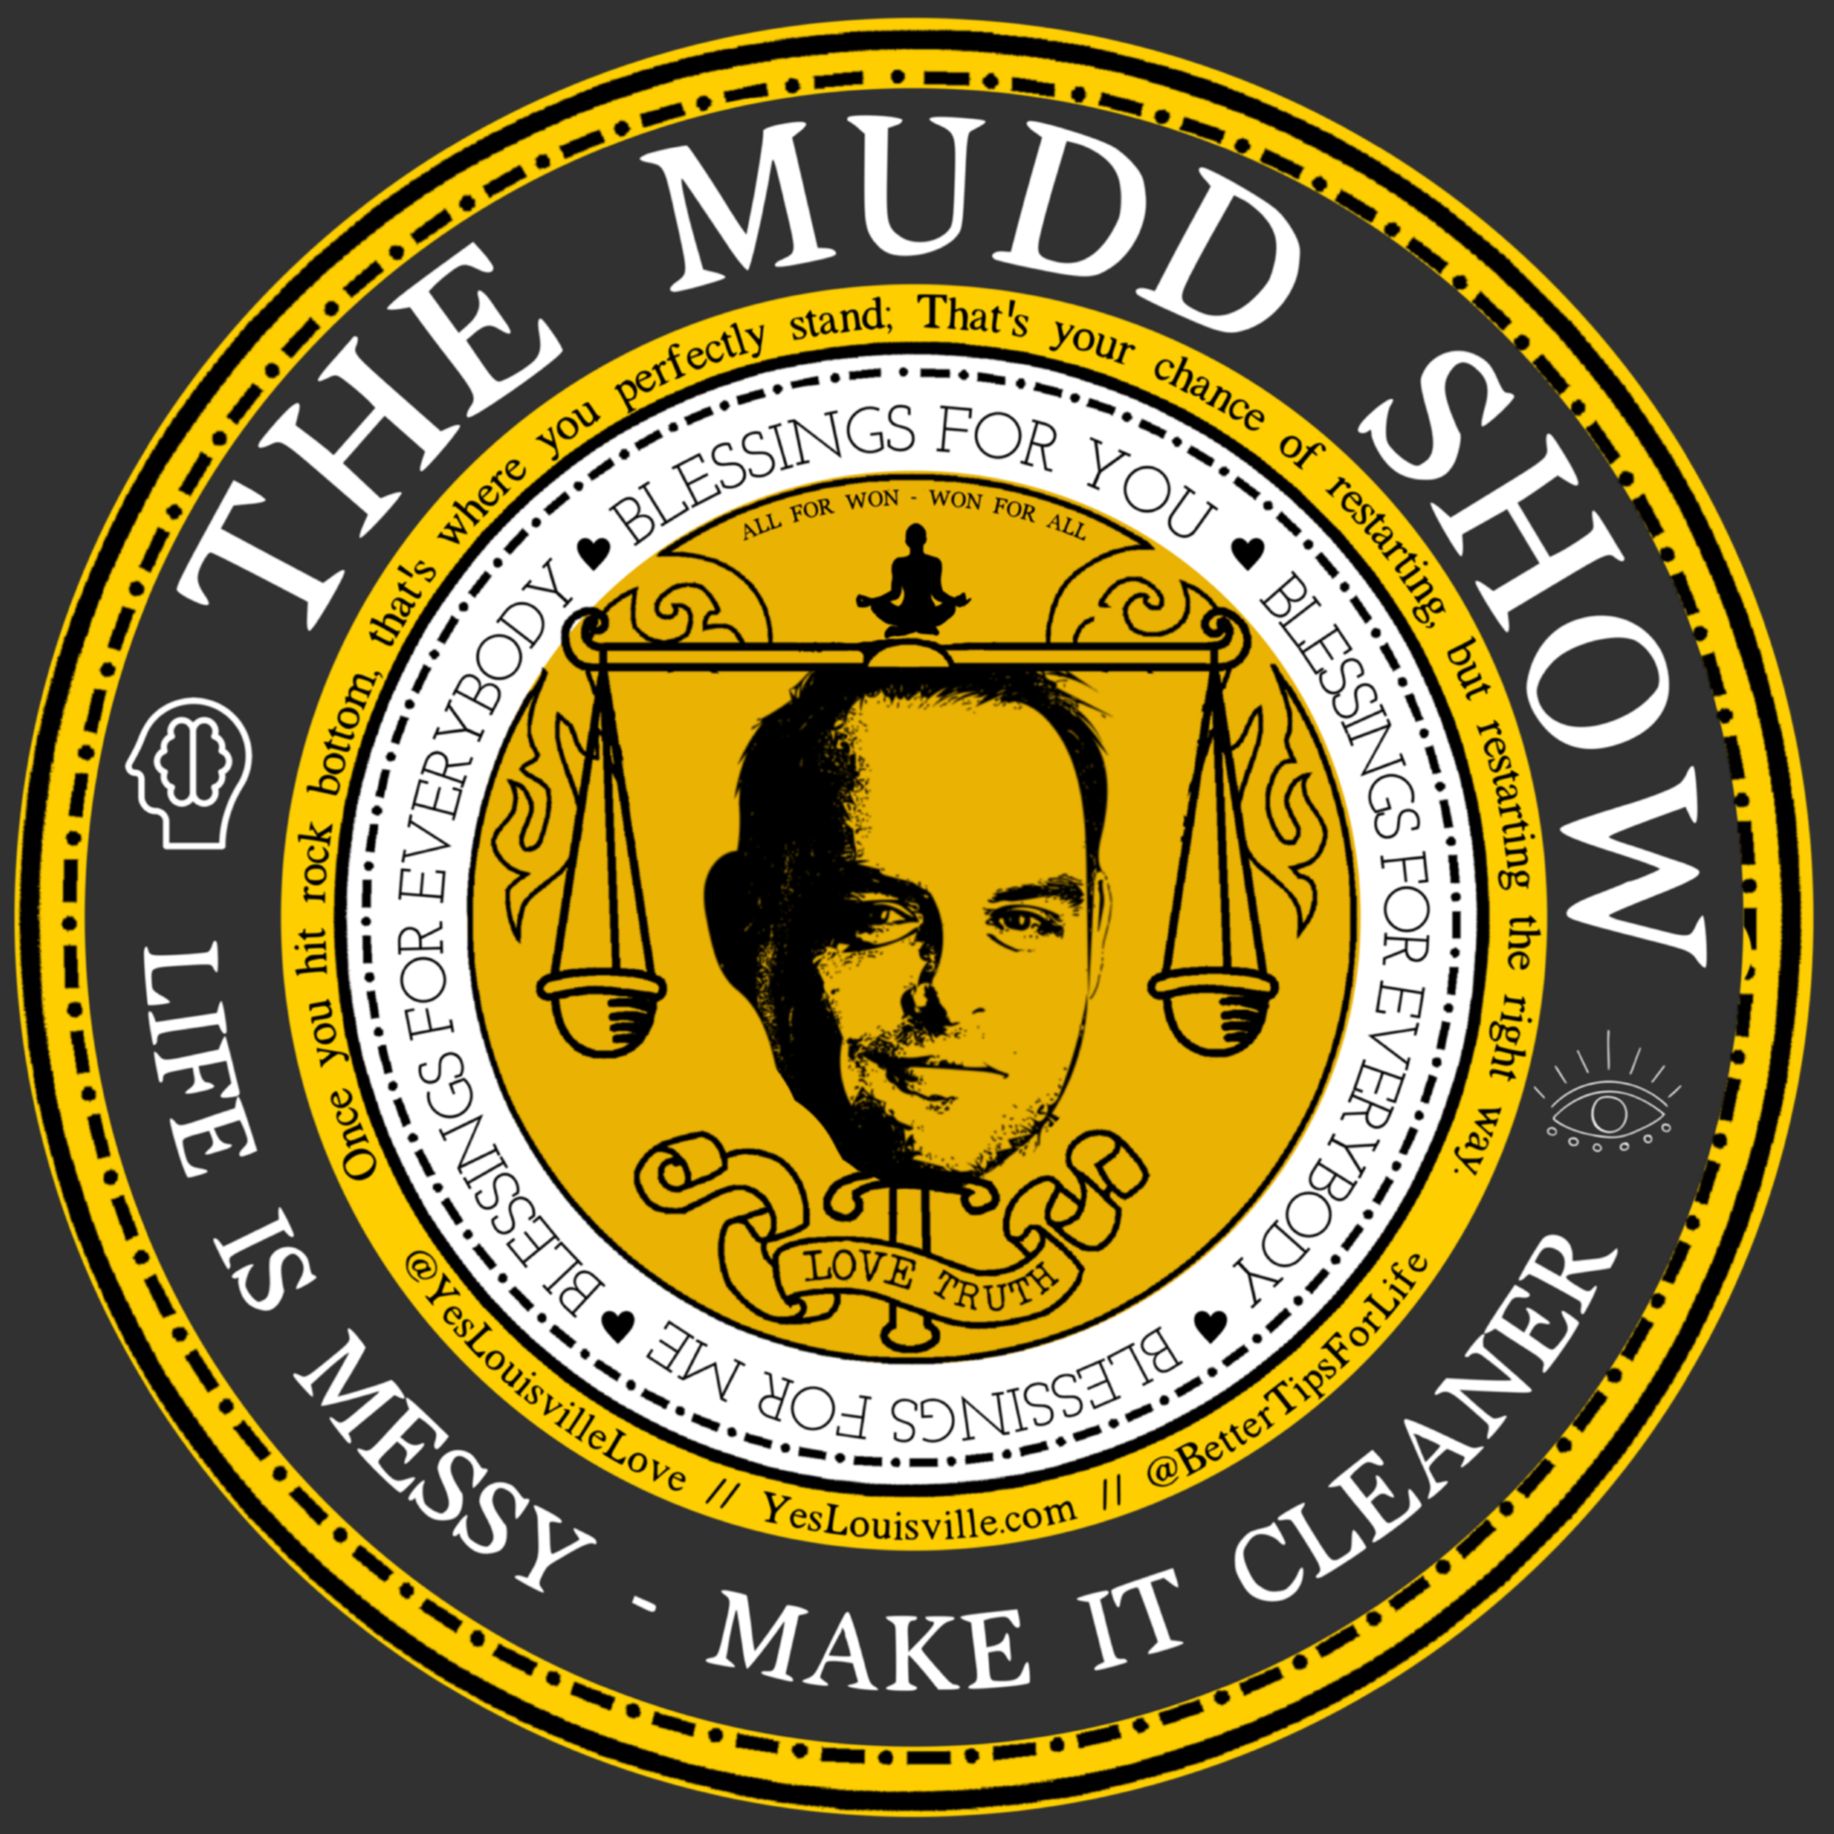 The Mudd Show